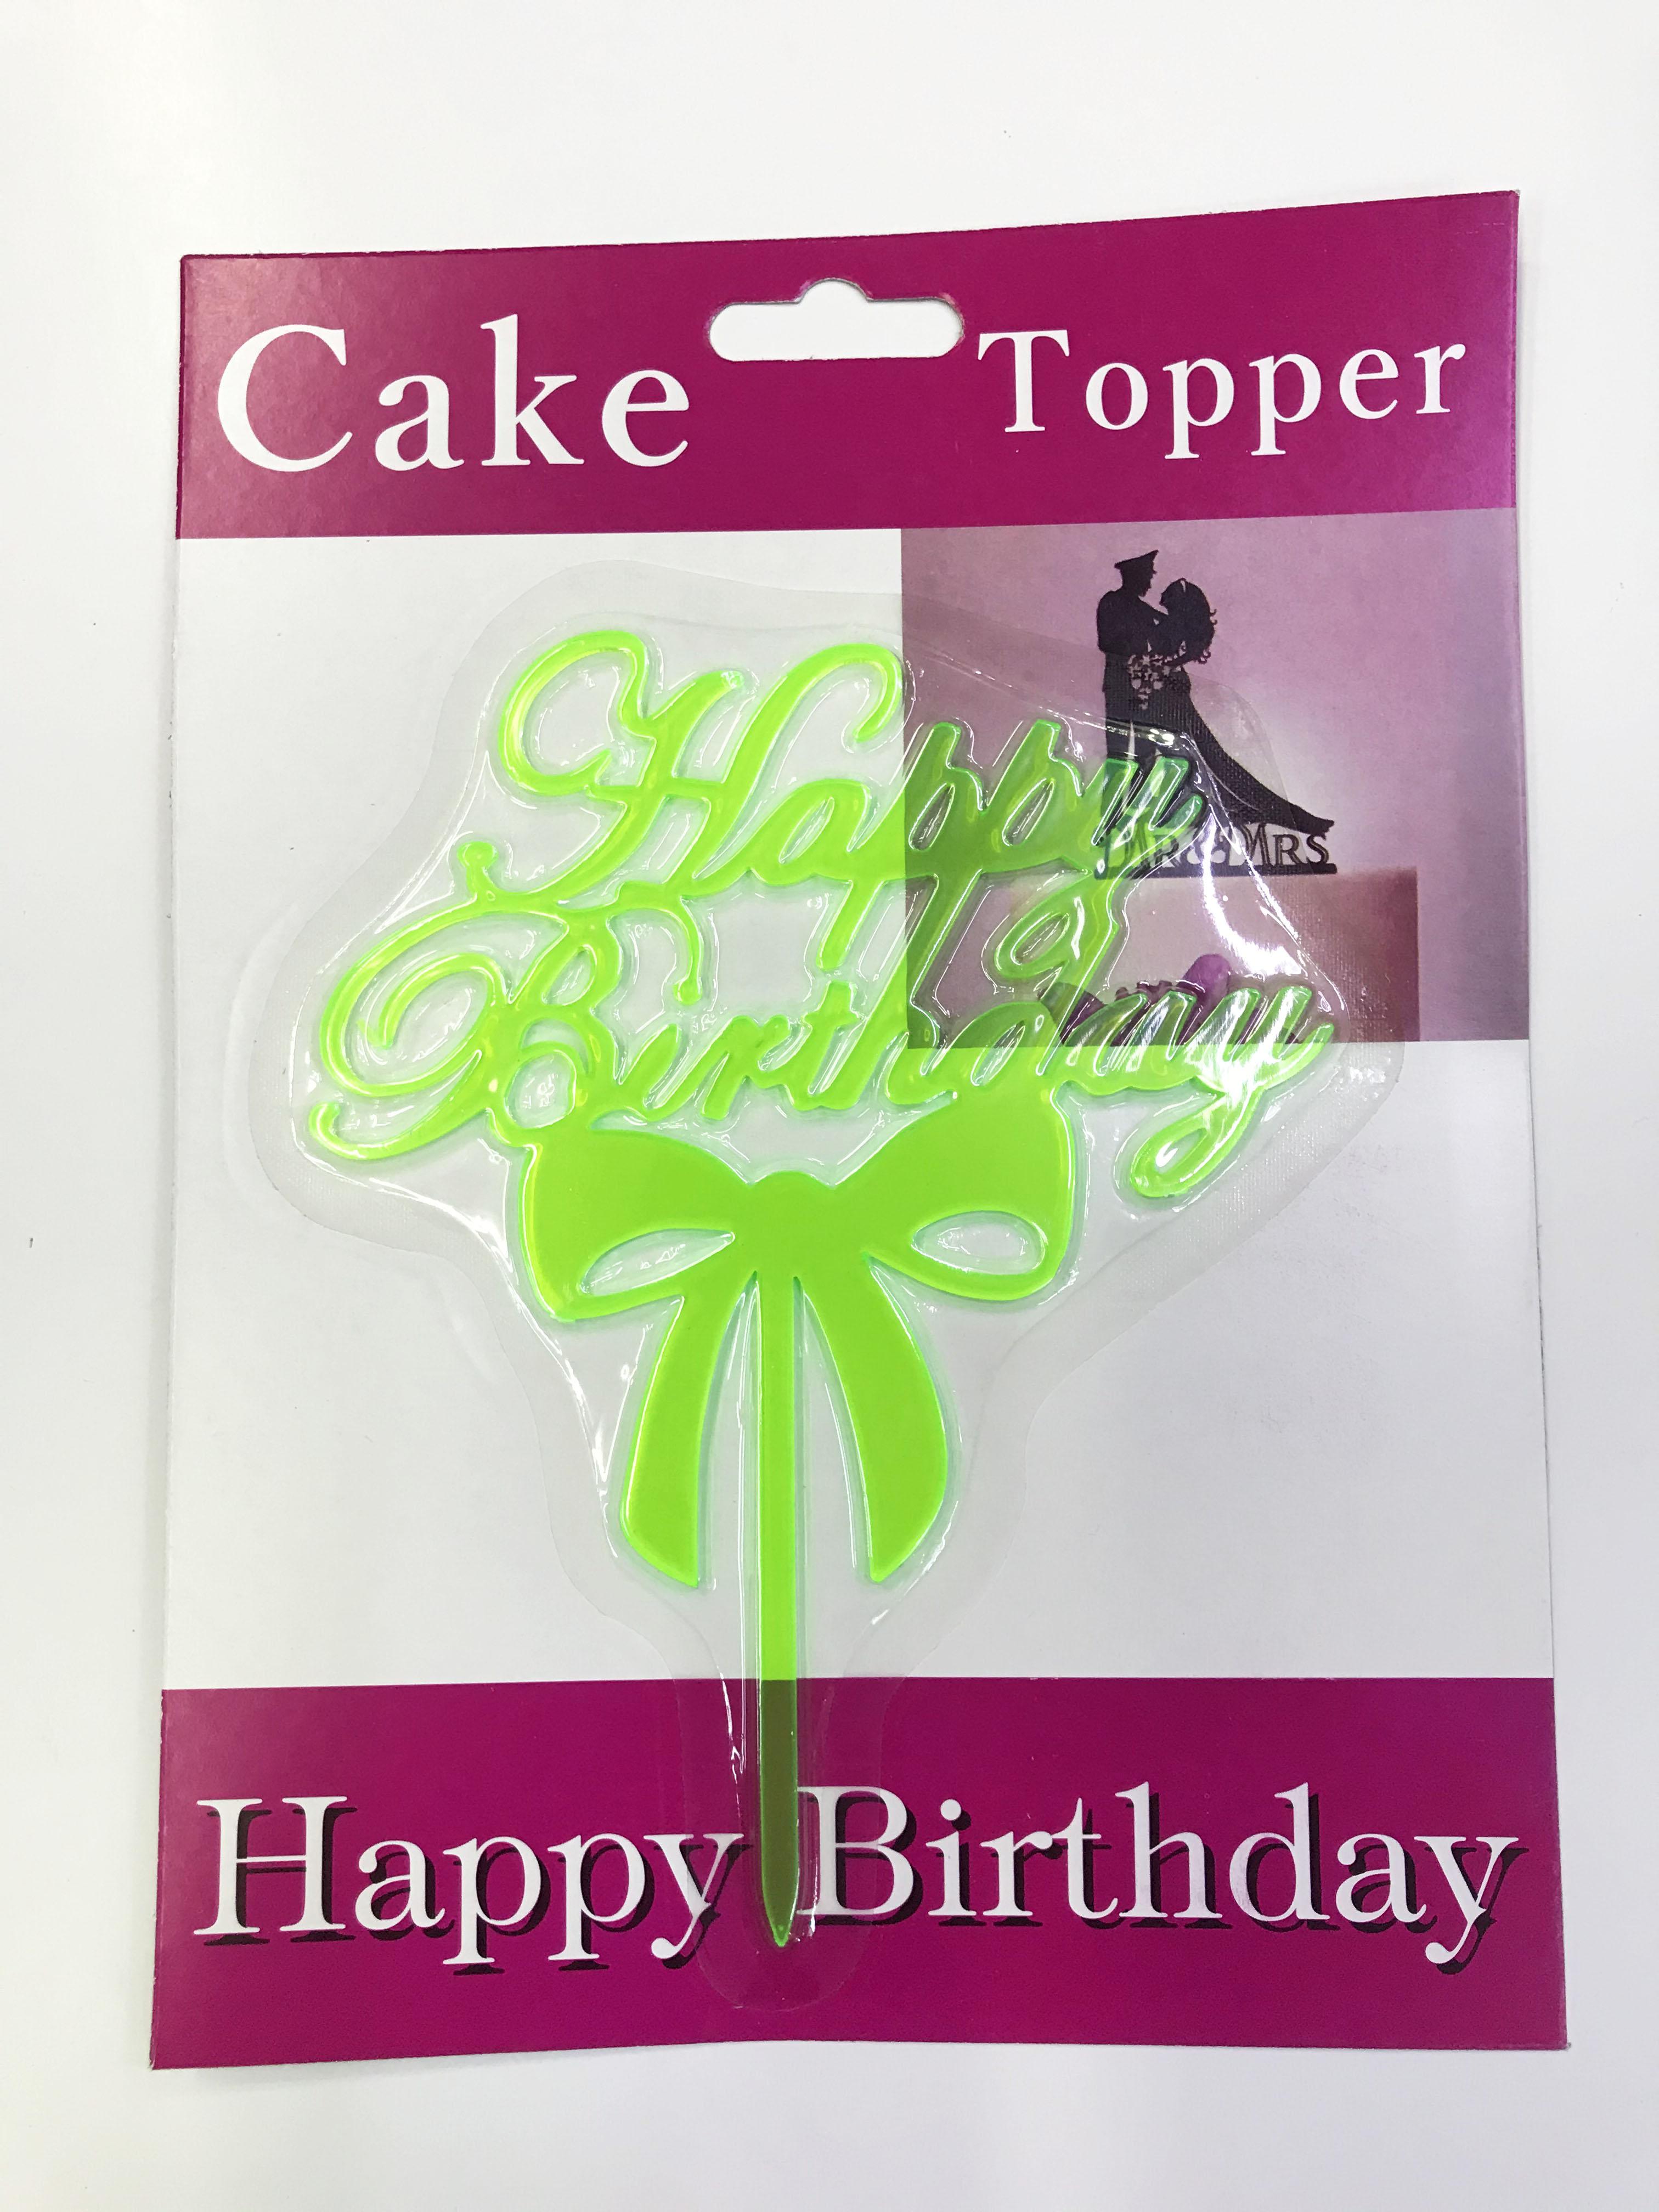 Happy Birthday Yazılı Fiyonklu Pasta Kek Çubuğu Yeşil Renk (CLZ)